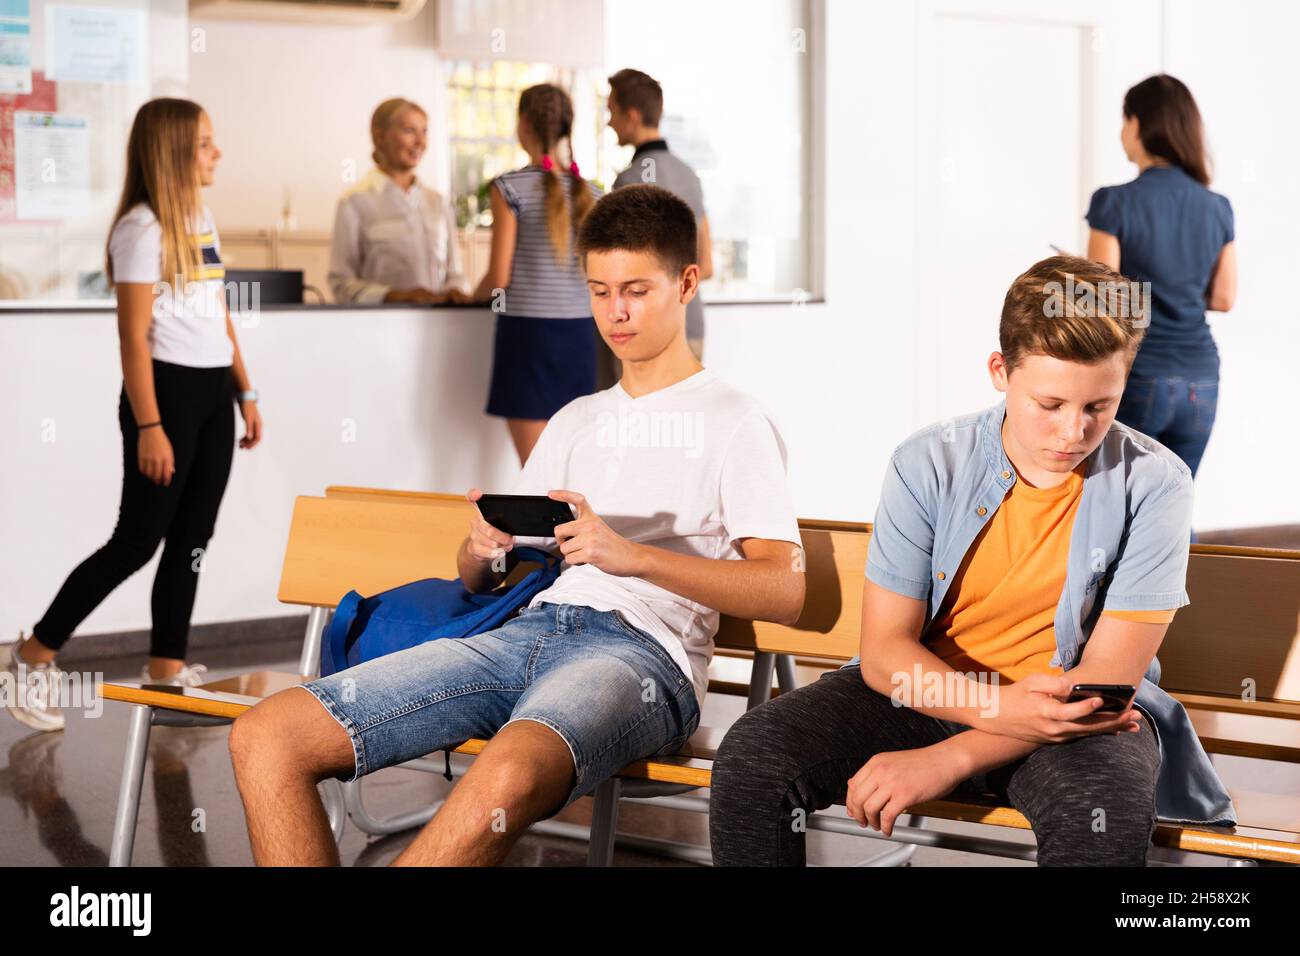 Teenagers using smartphones in college hall Stock Photo